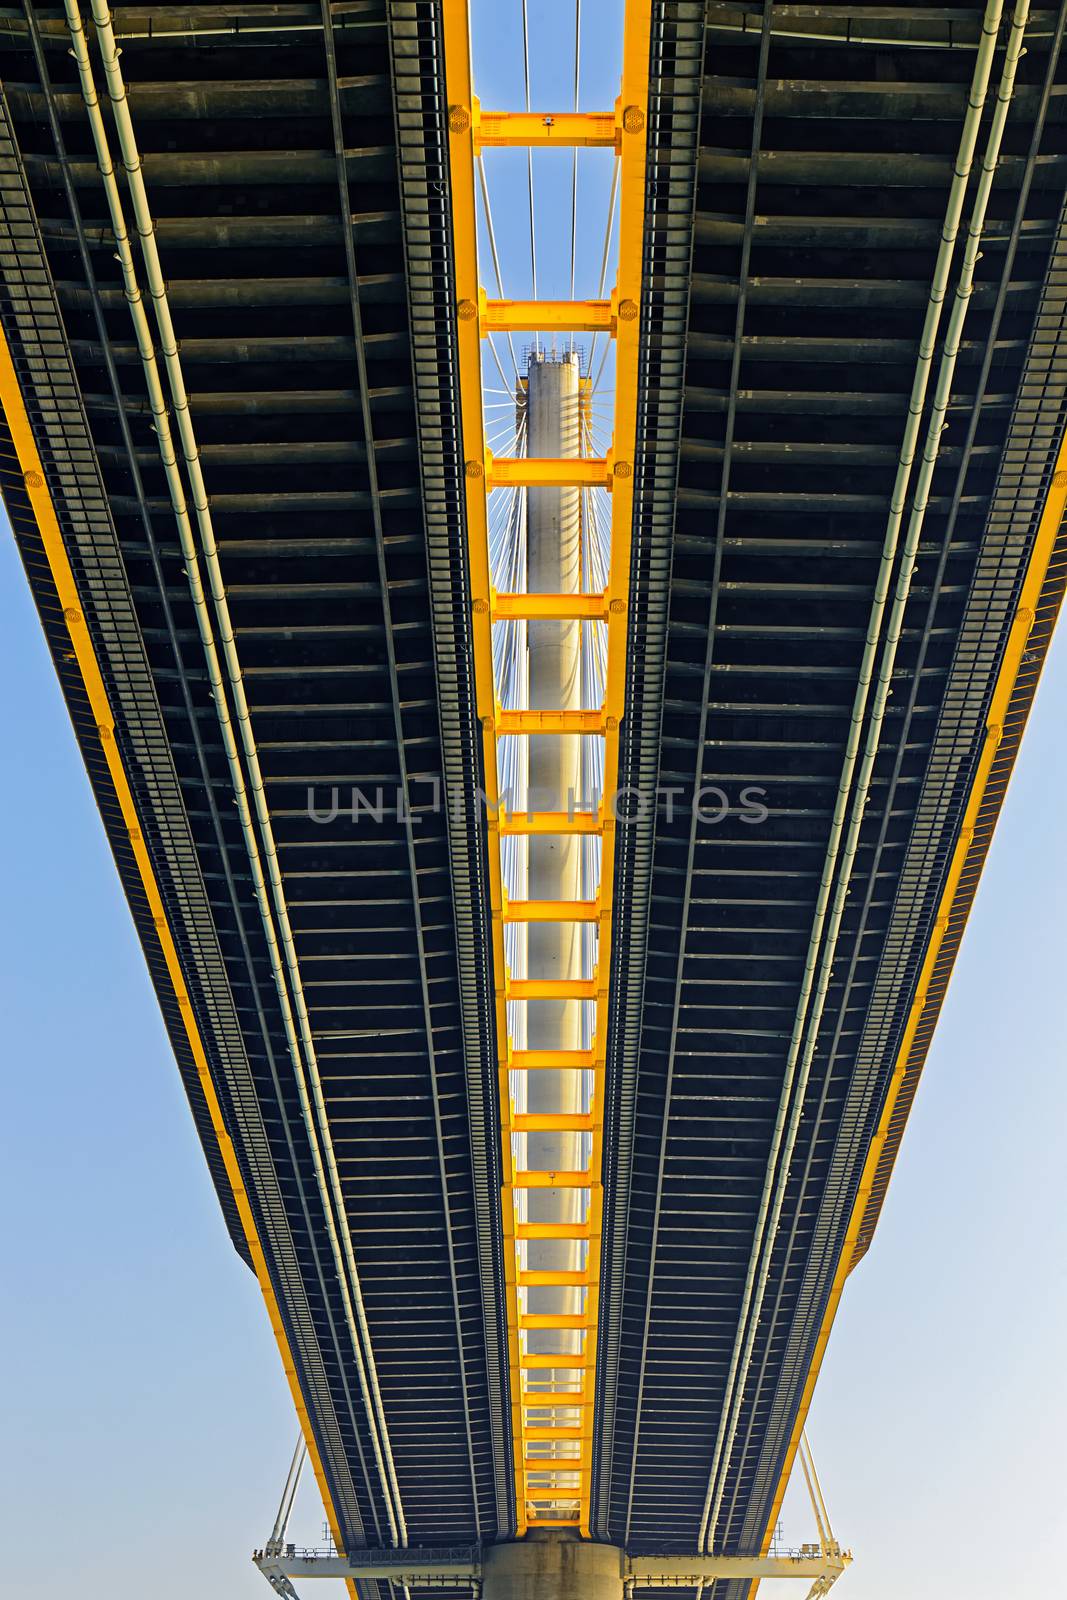 under overpass road bridges. by cozyta